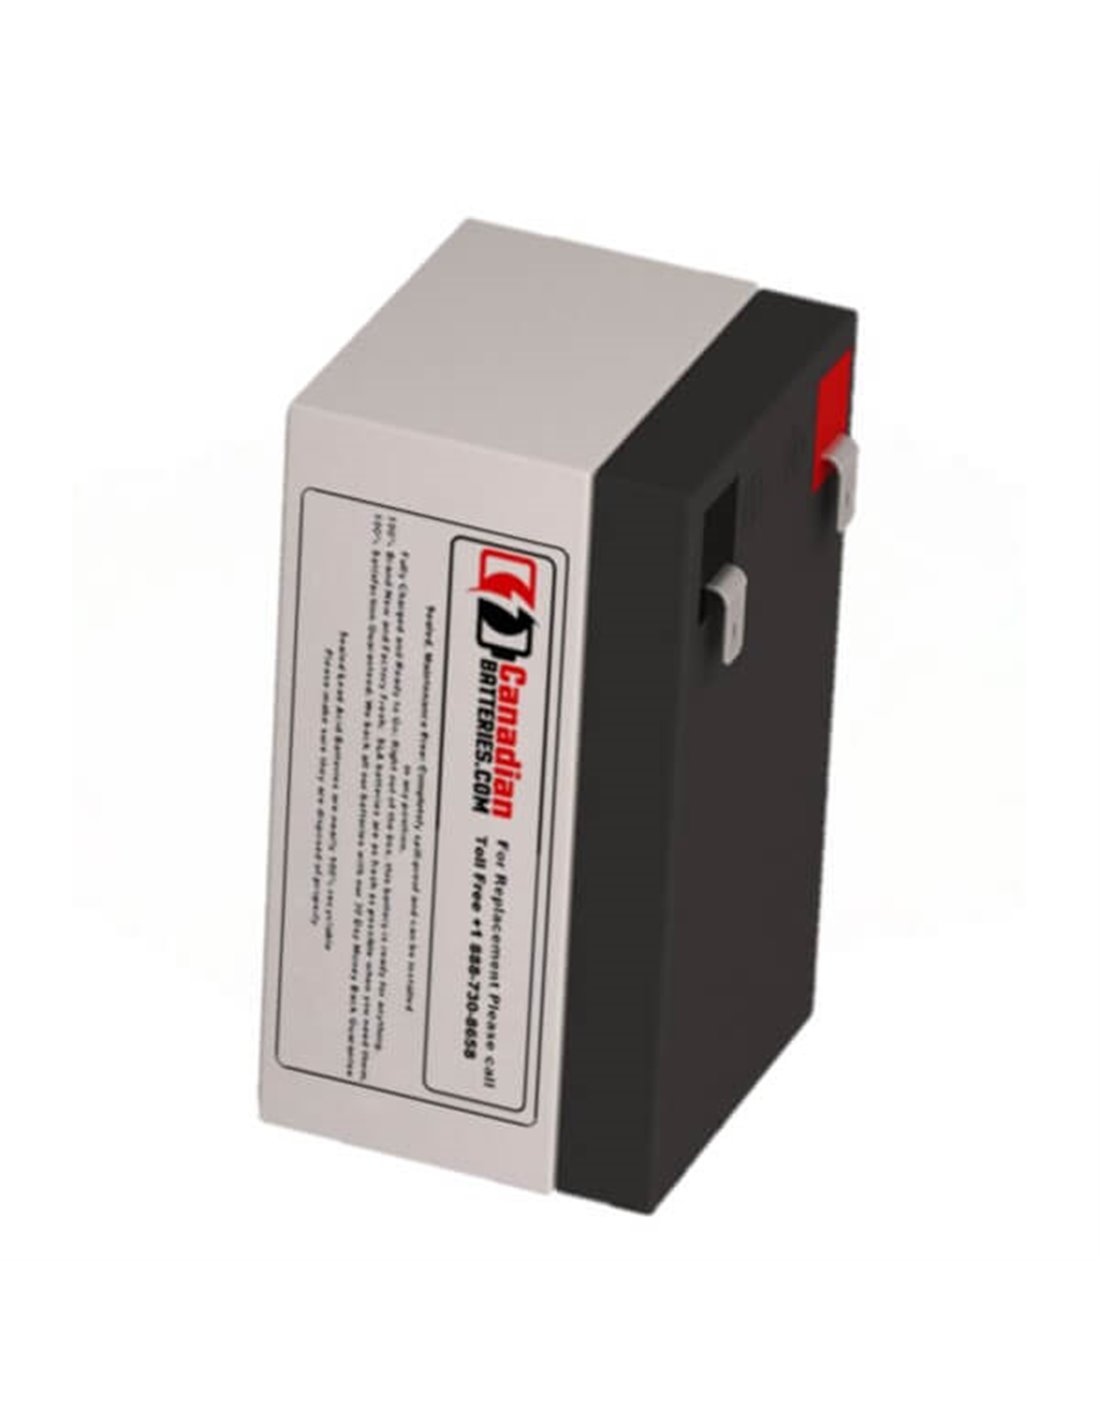 Battery for Ultra Rcd-500 UPS, 1 x 12V, 3.4Ah - 40.8Wh